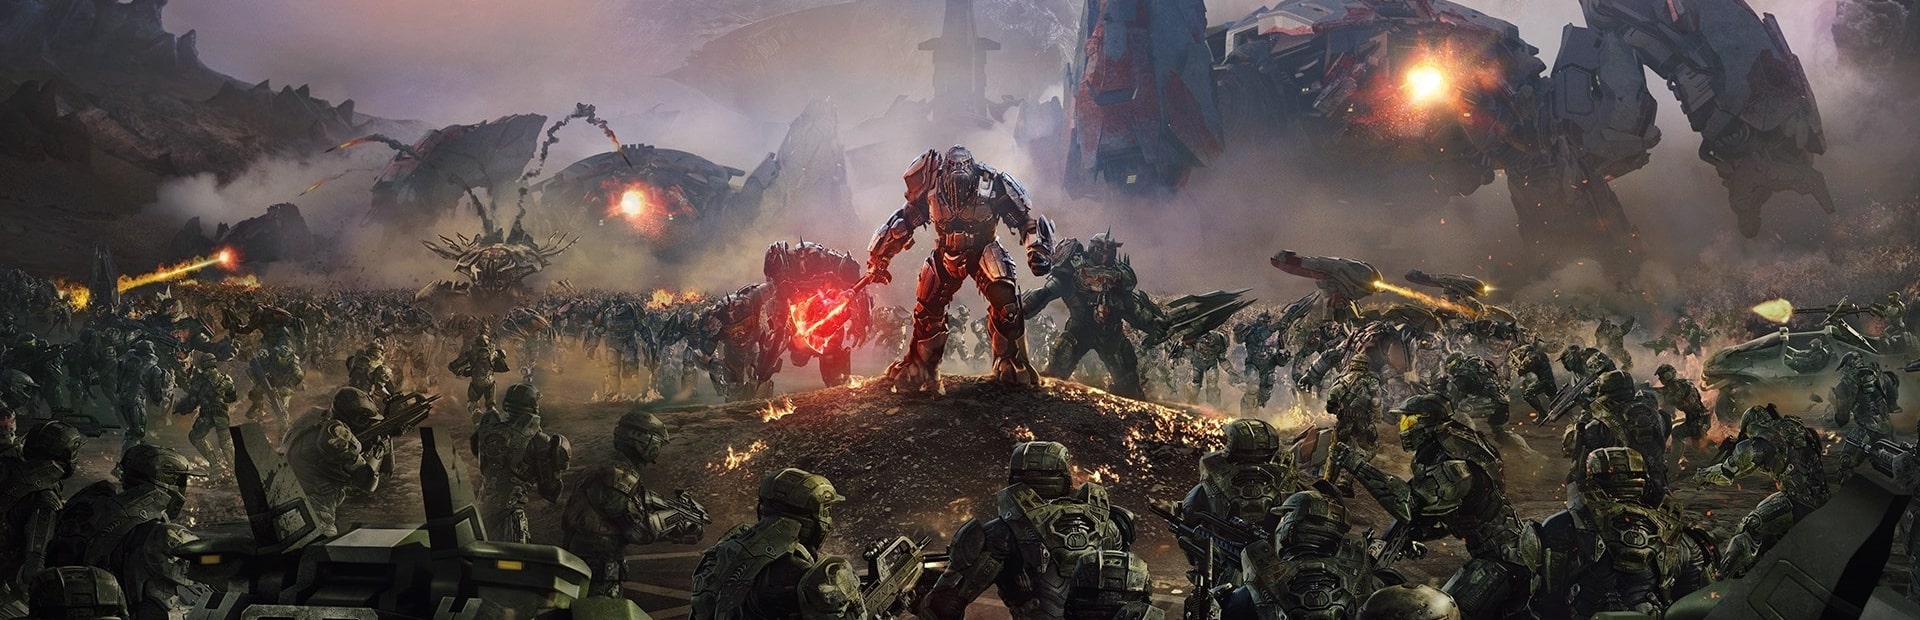 Halo Wars 2 | PC Xbox | Windows Digital Download | Wallpaper